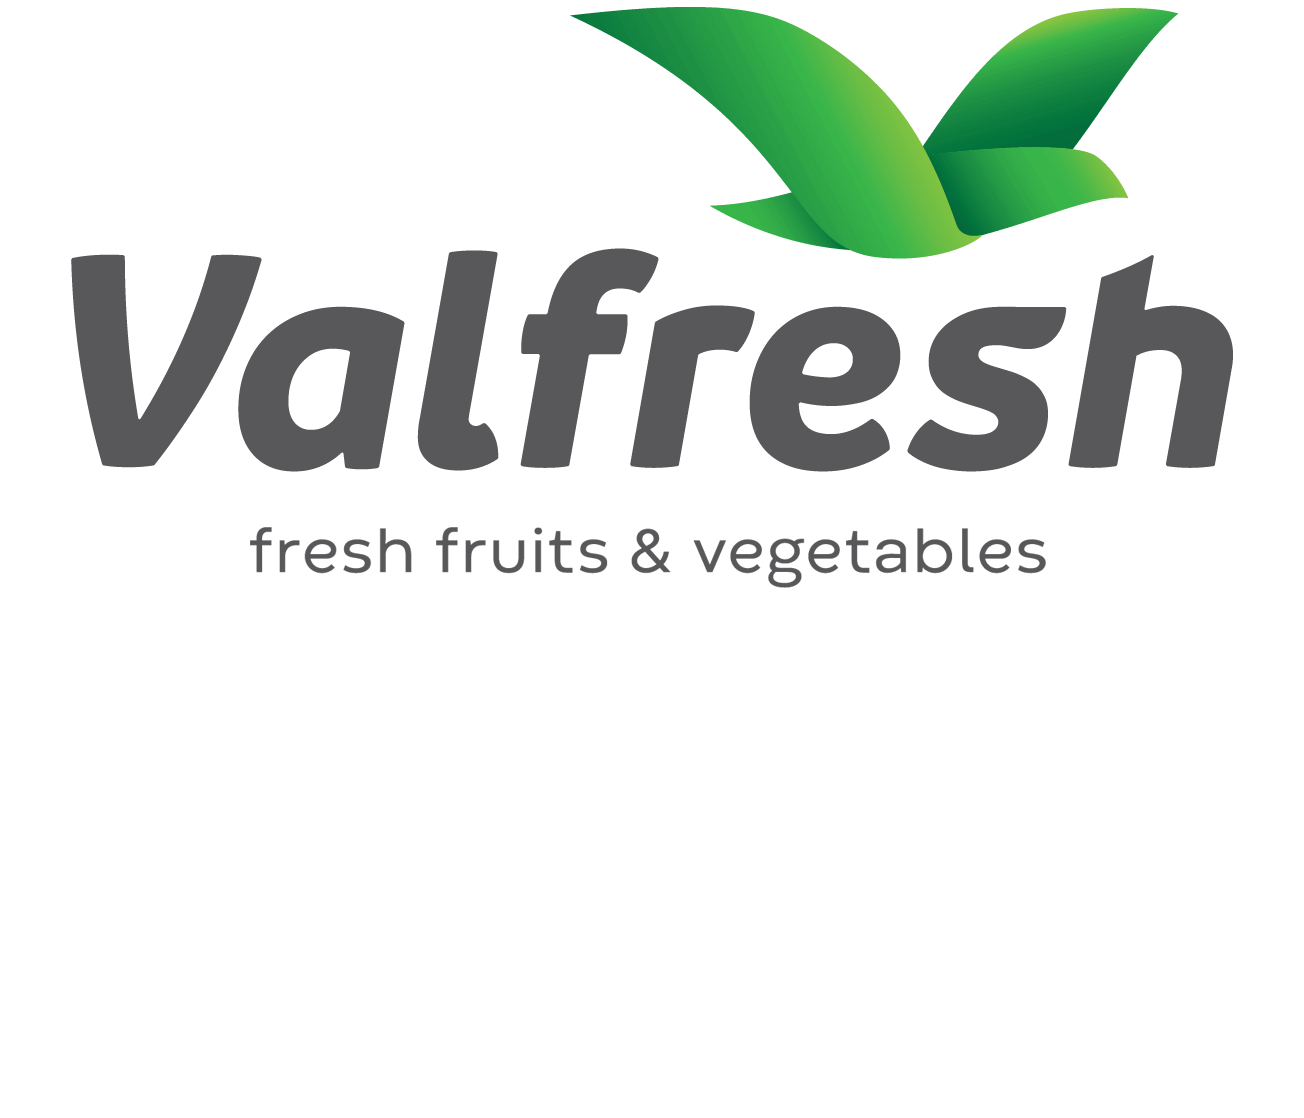 Logotipo Valfresh - fresh fruits & vegetables